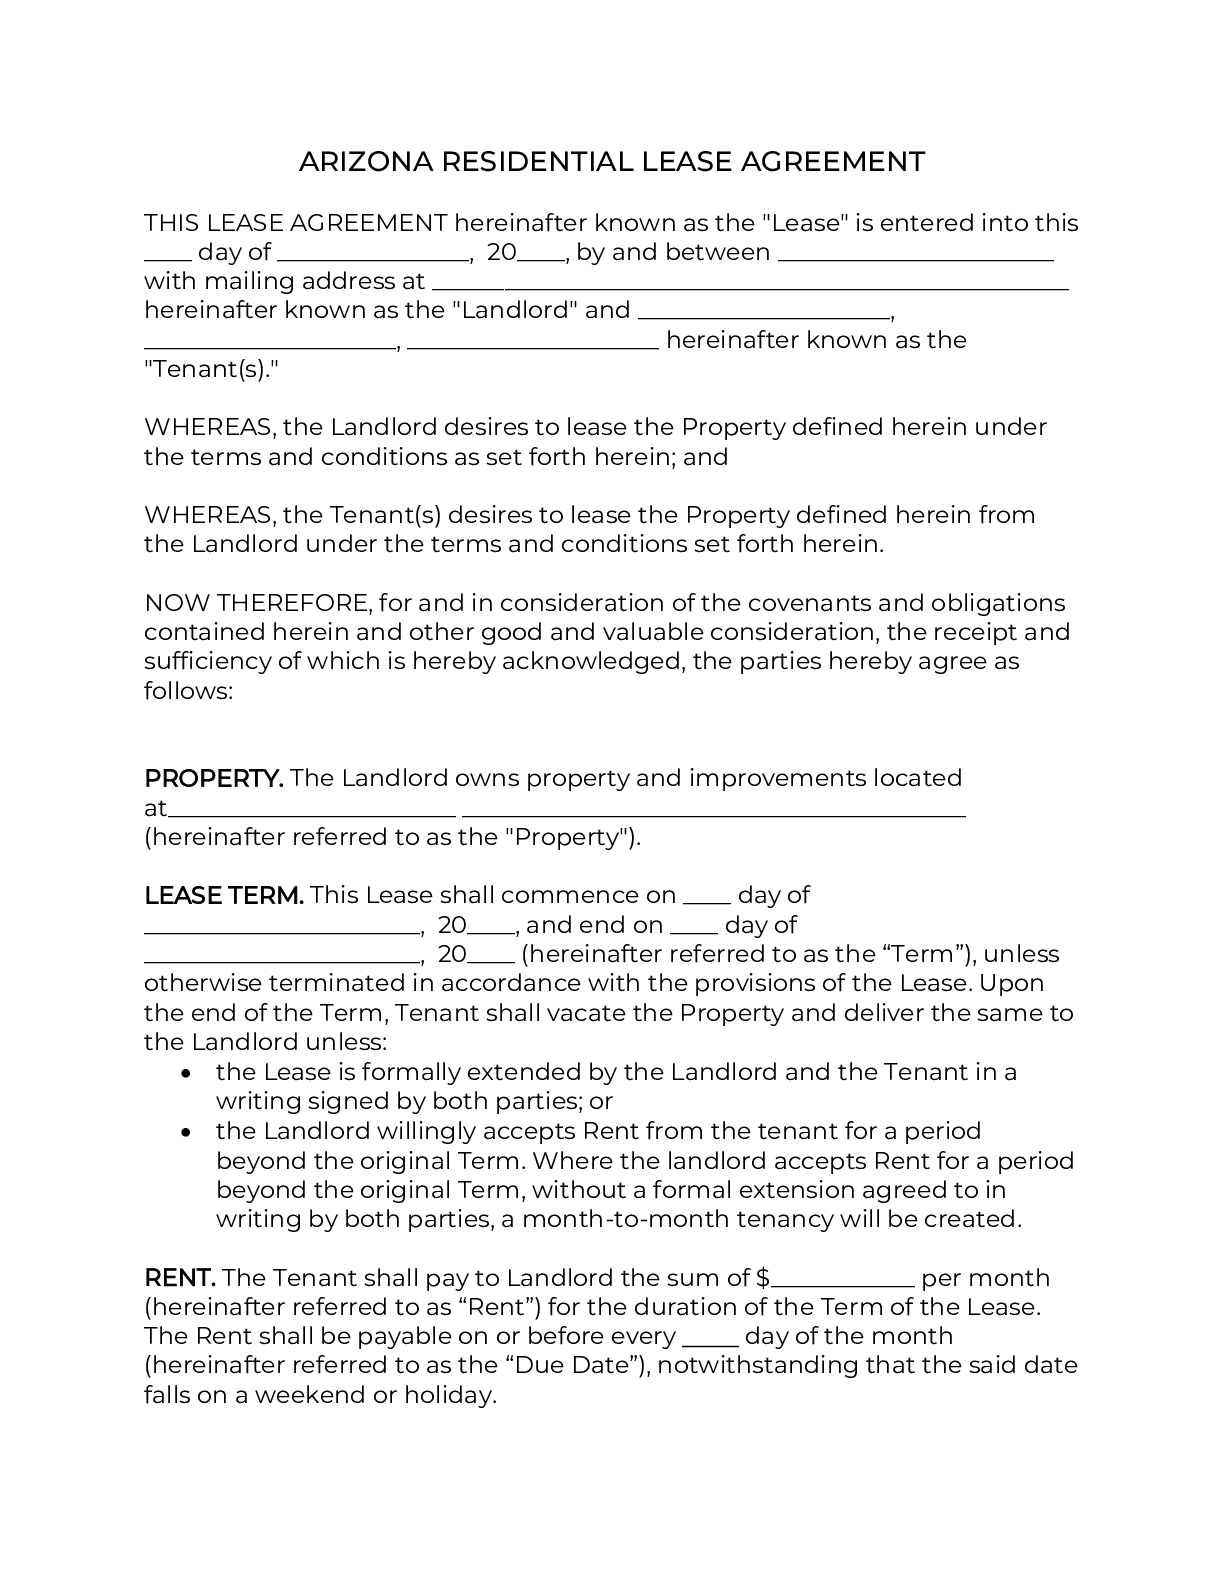 iPropertyManagement Arizona Residential Lease Agreement